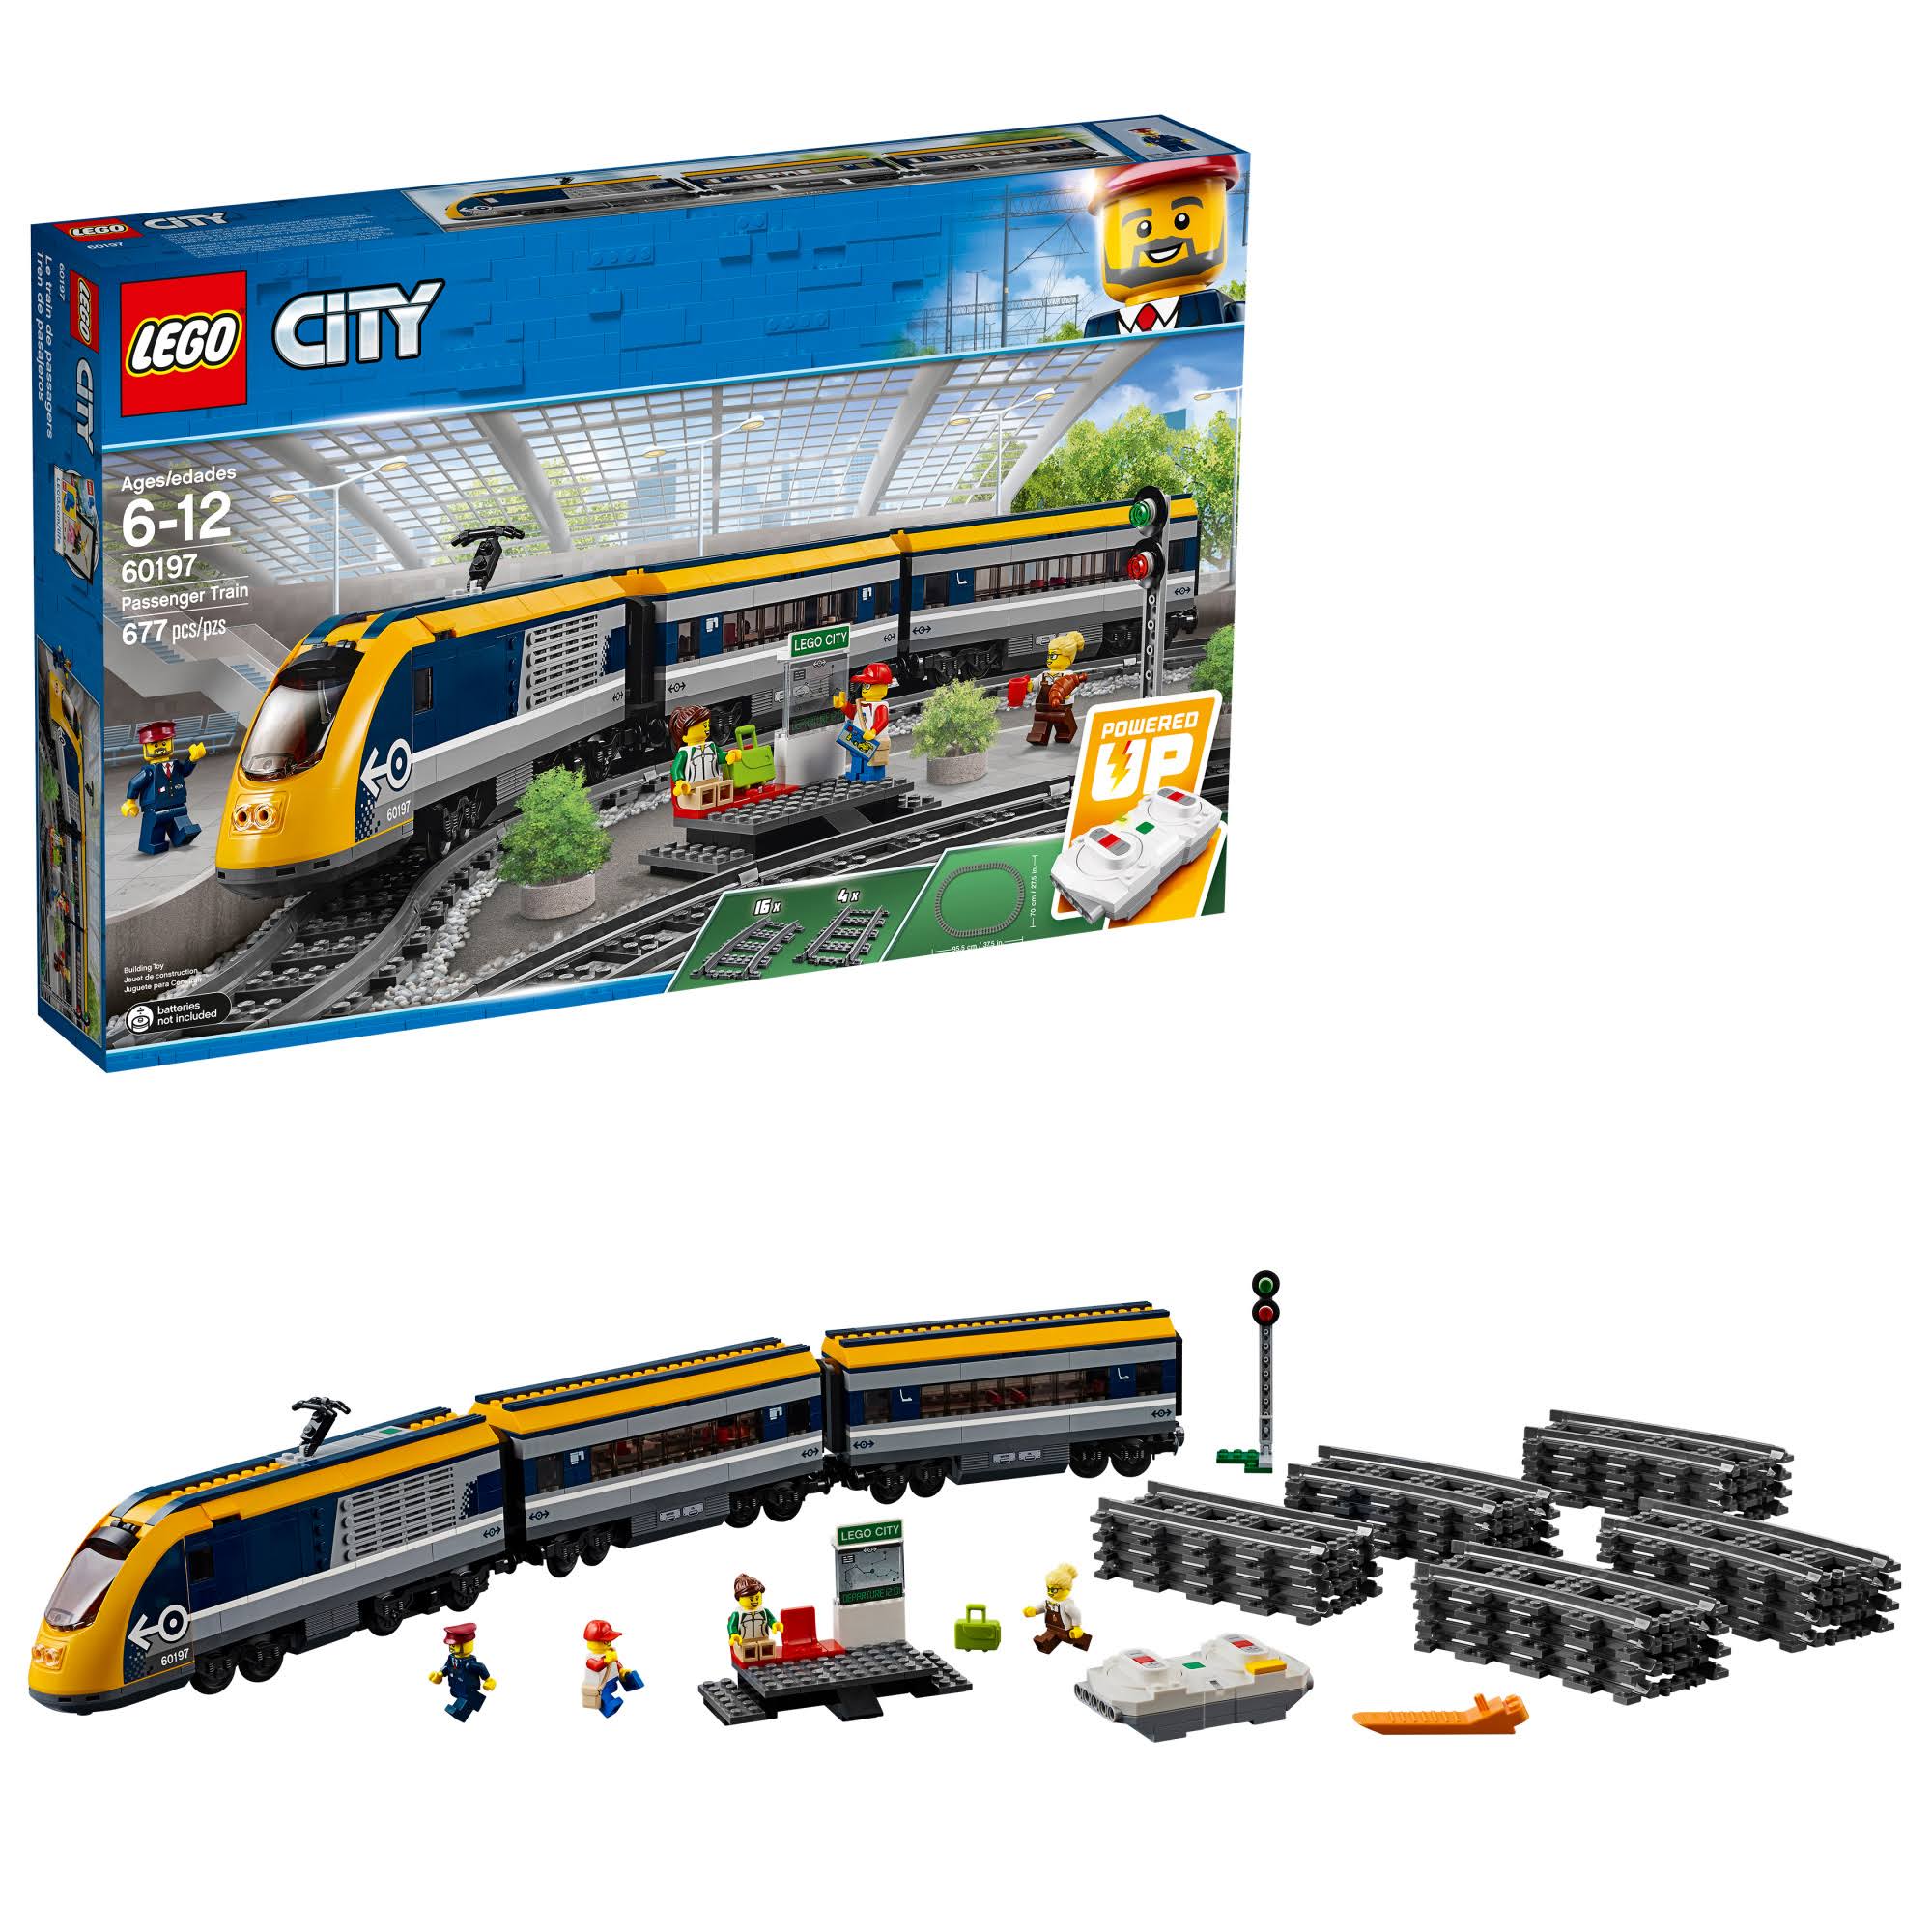 LEGO City 60197 - Passenger Train